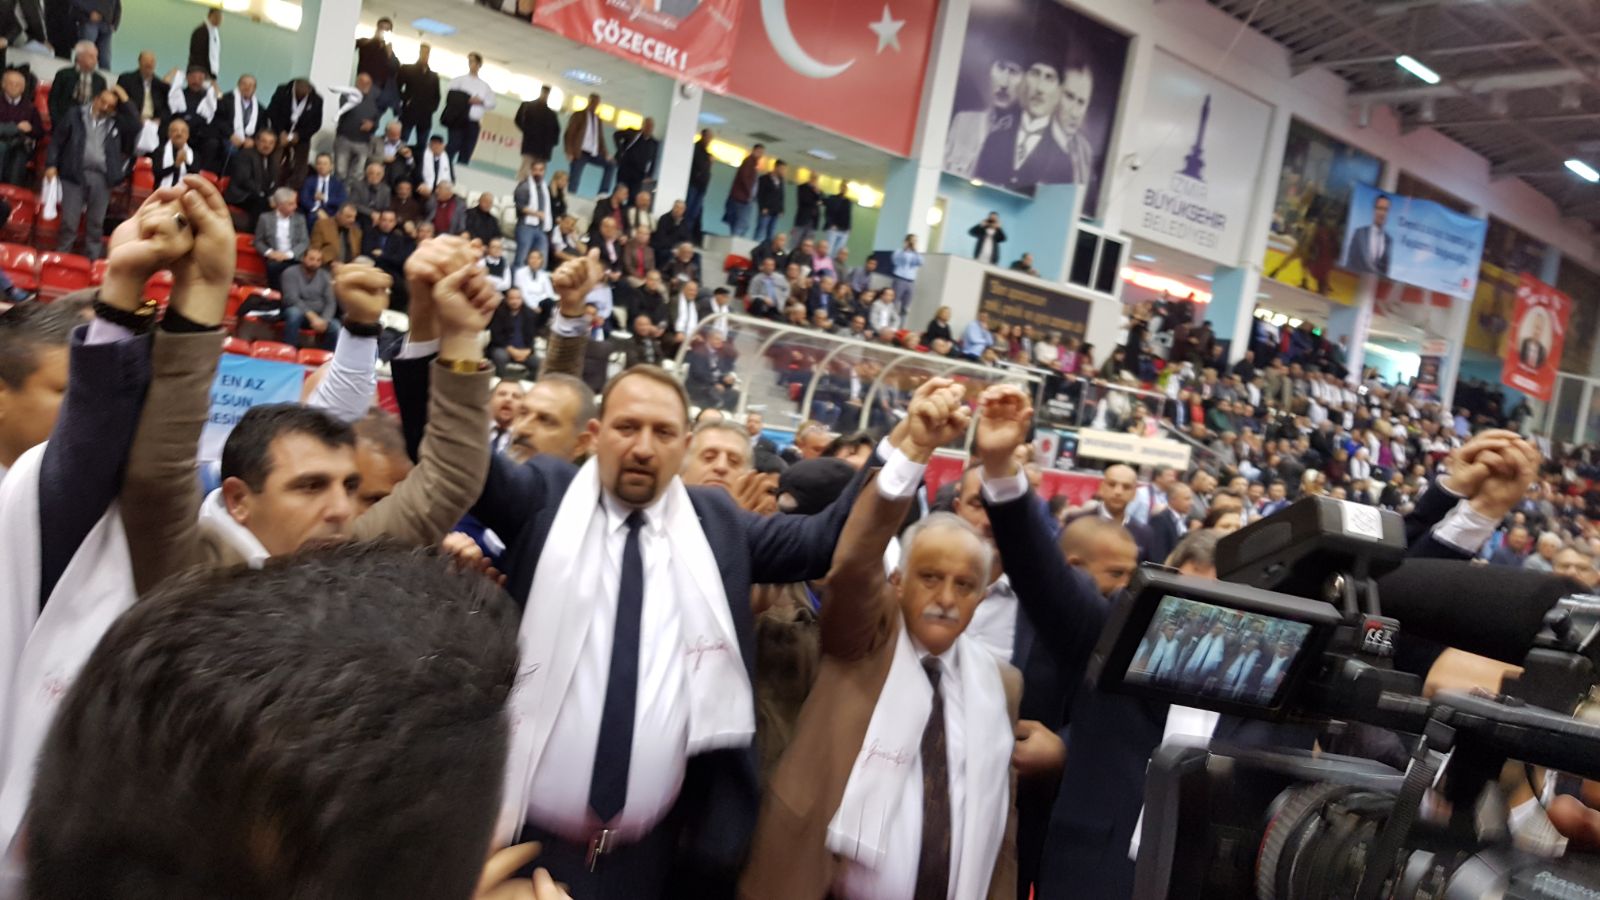 CHP İzmir İl Kongresi